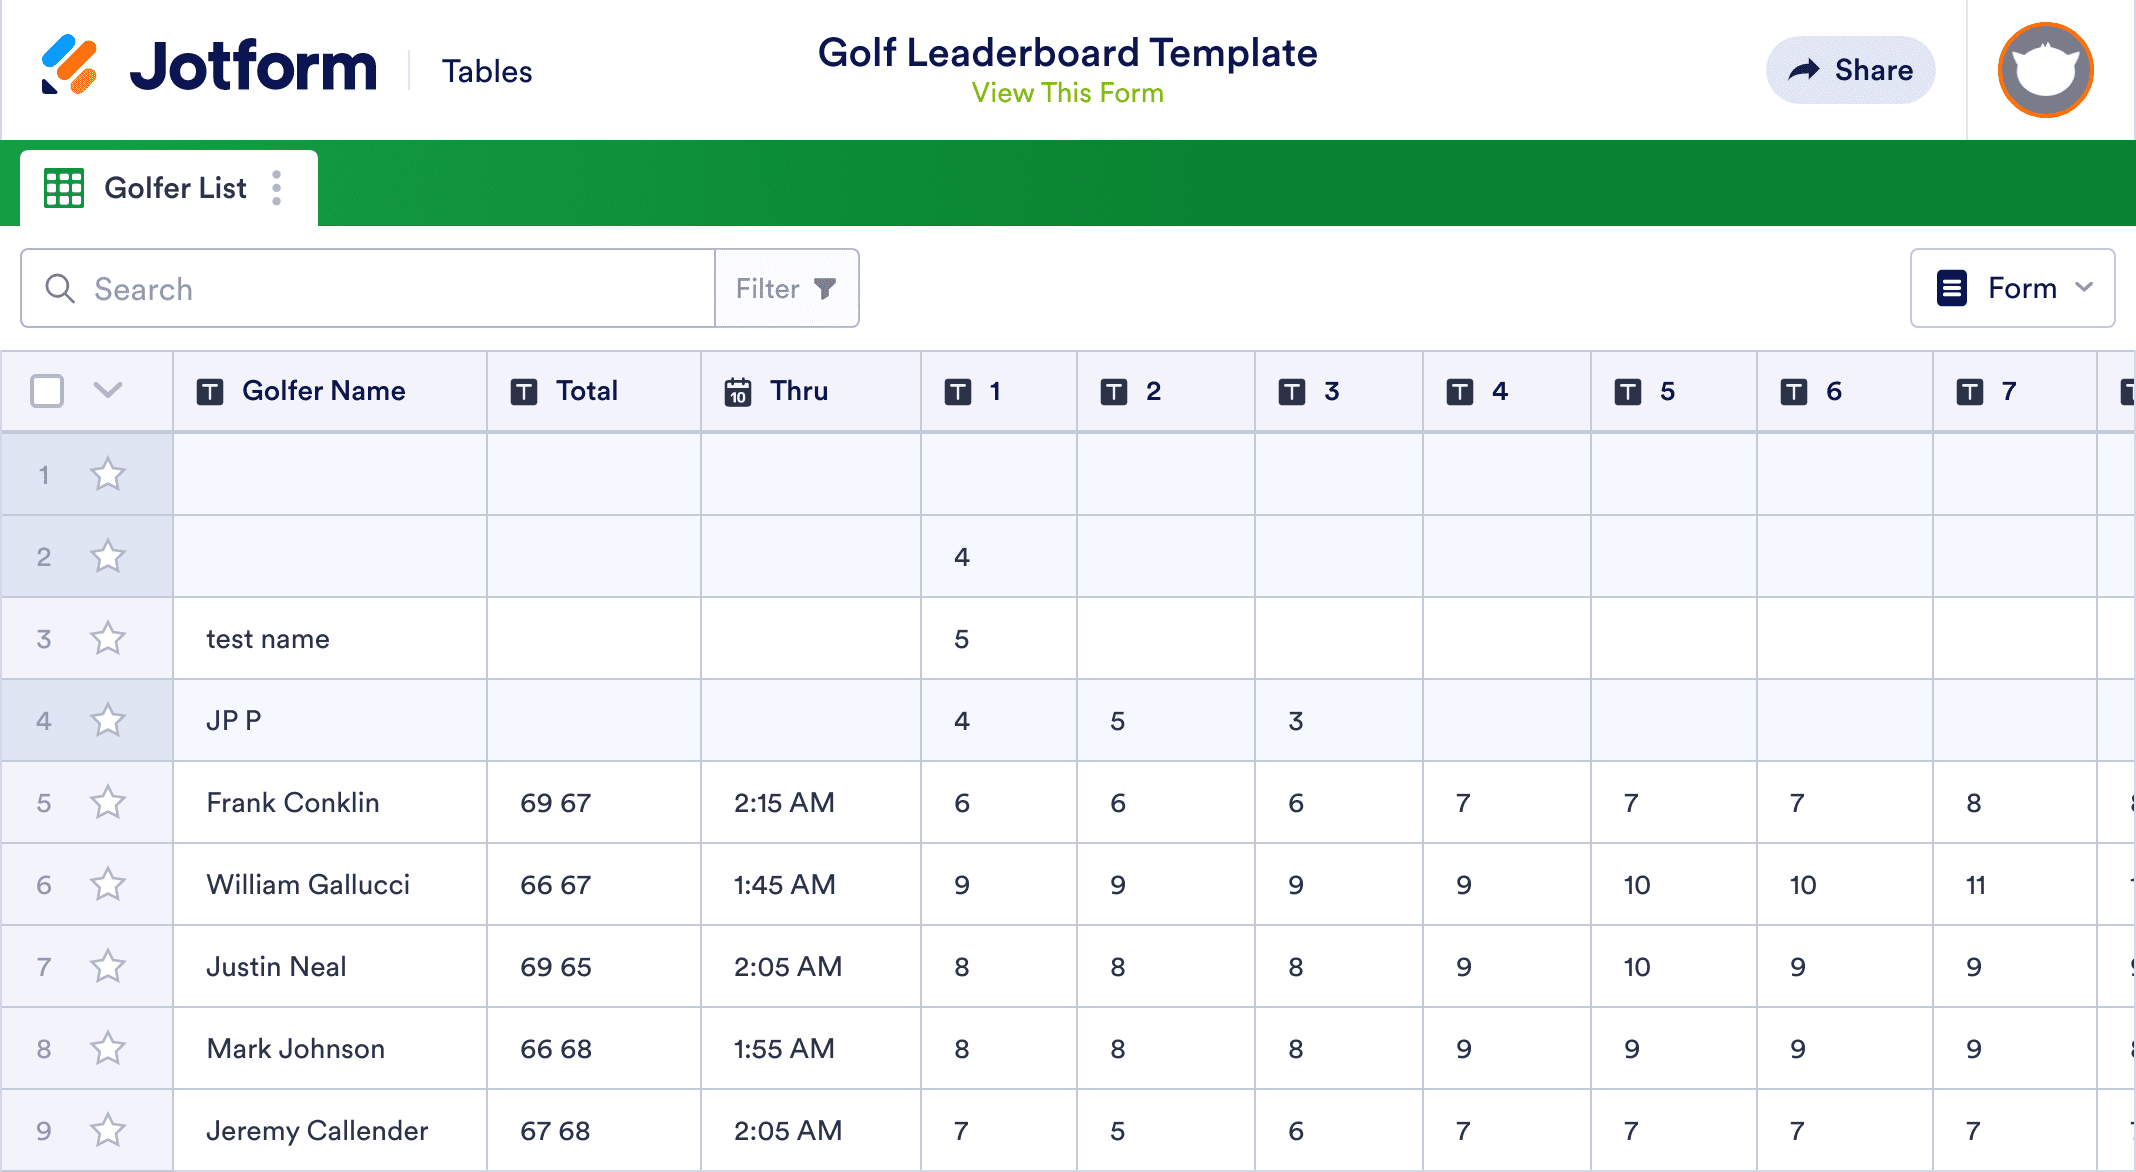 golf-leaderboard-template-jotform-tables